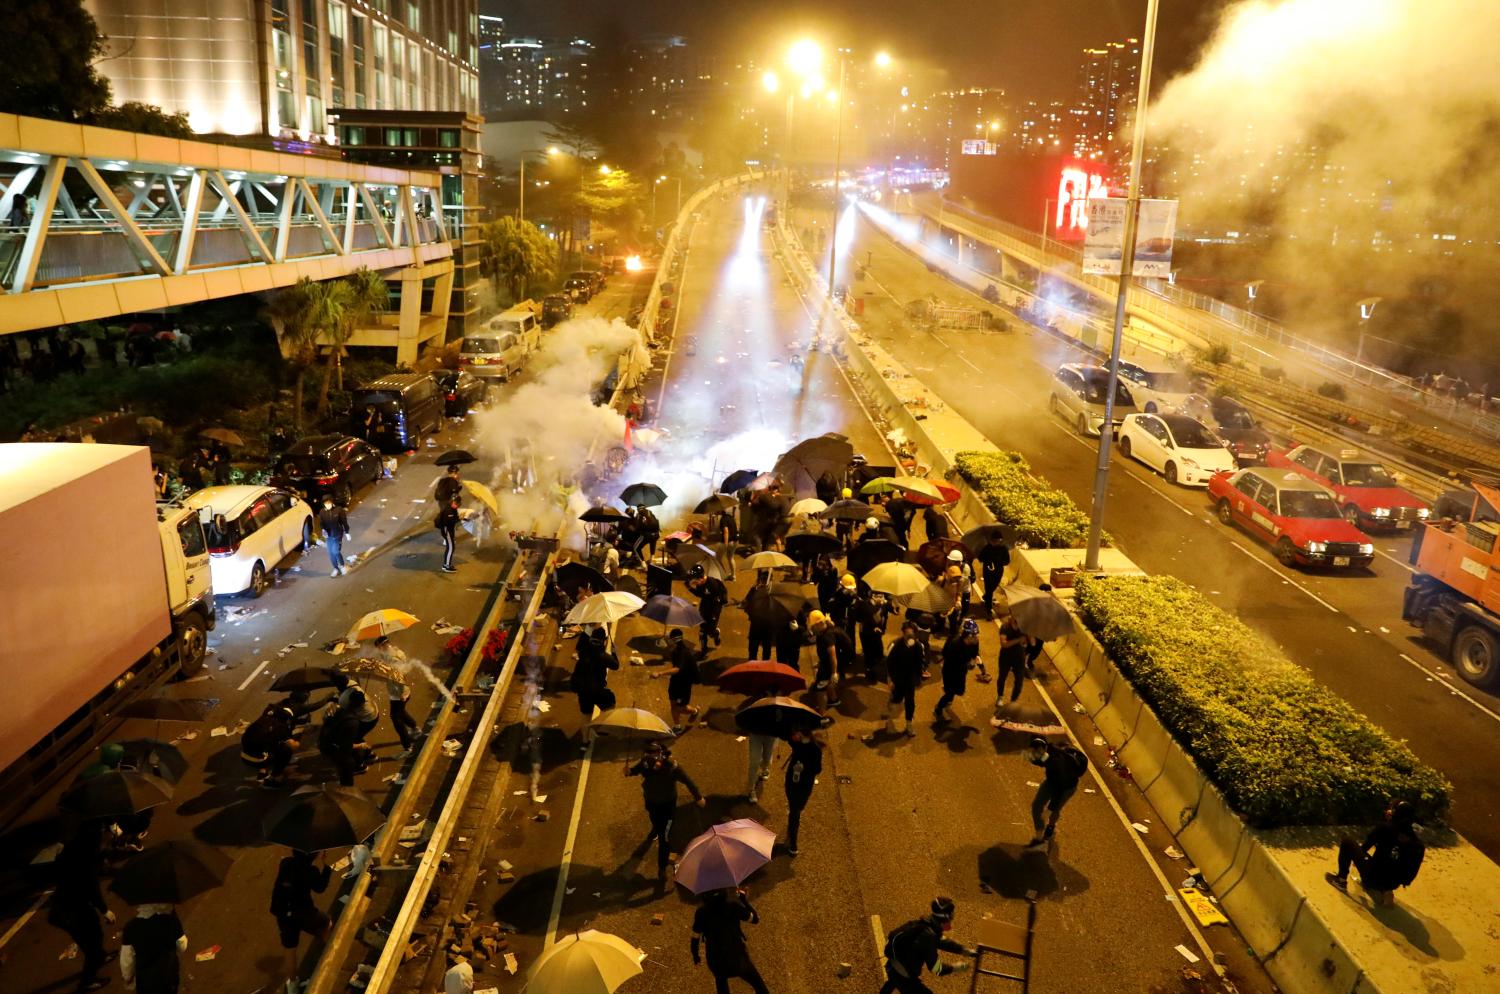 Anti-government demonstrators take cover during clashes with police near the Hong Kong Polytechnic University (PolyU) in Hong Kong, China November 18, 2019. REUTERS/Adnan Abidi - RC2TDD9TCYYS